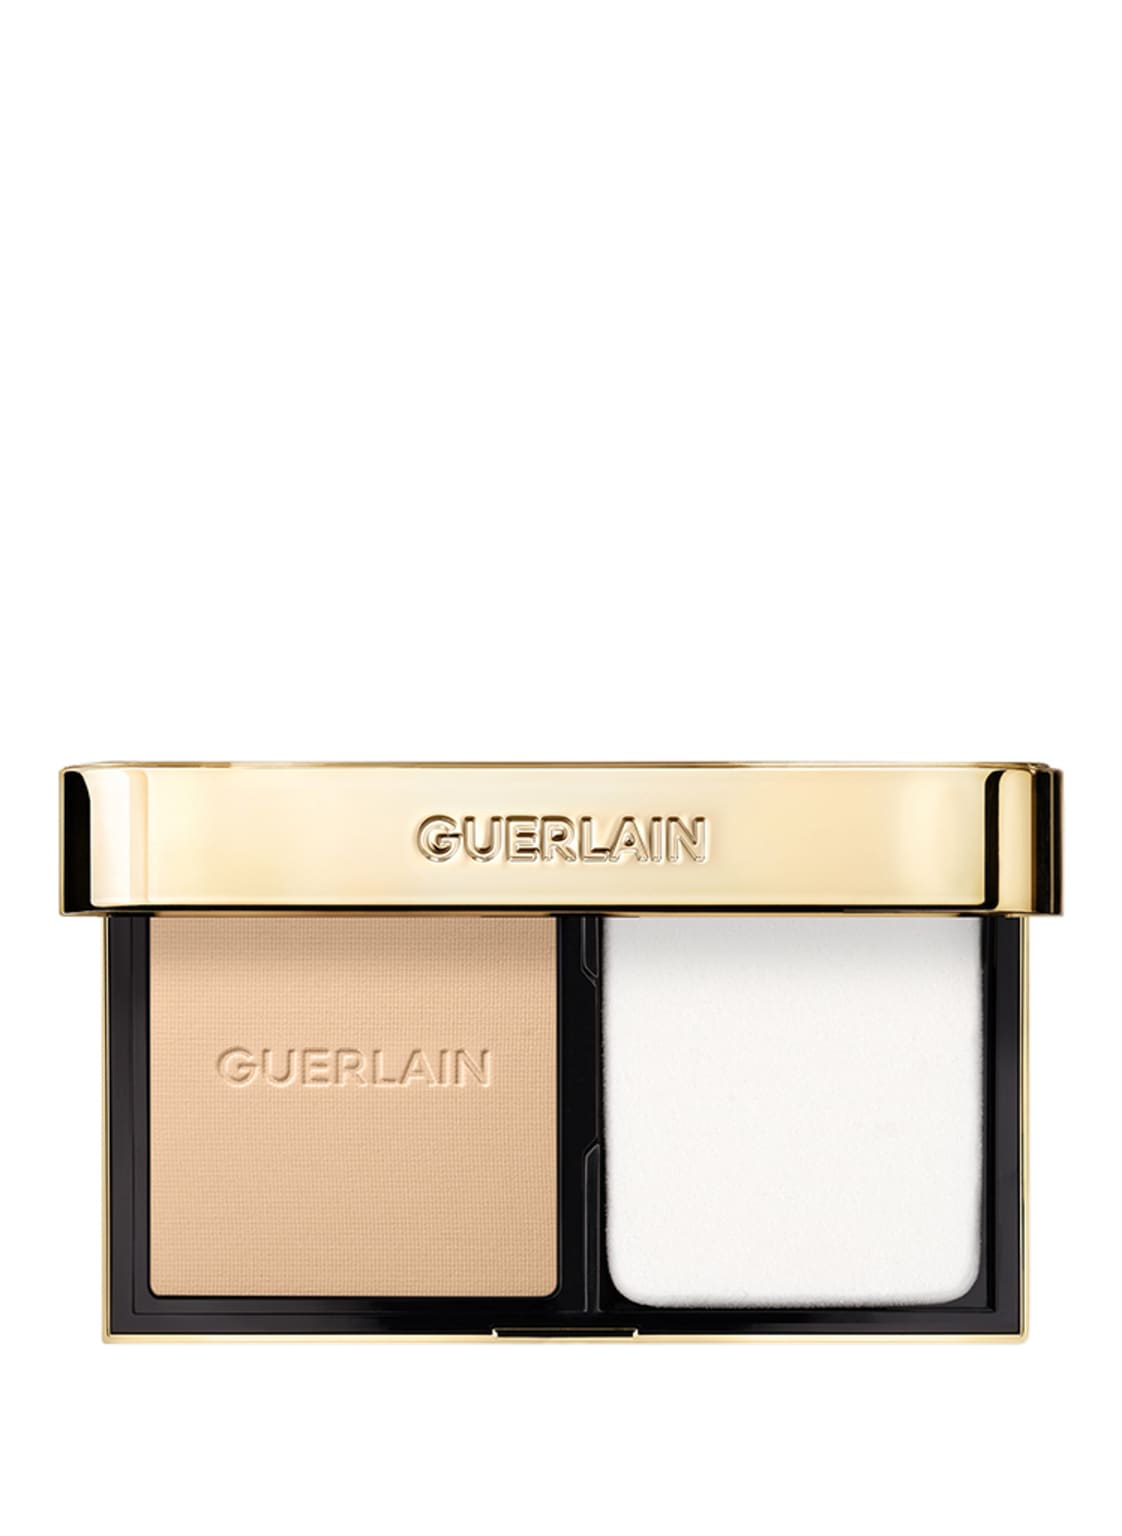 Guerlain Parure Gold Skin Control Kompakt Foundation von Guerlain